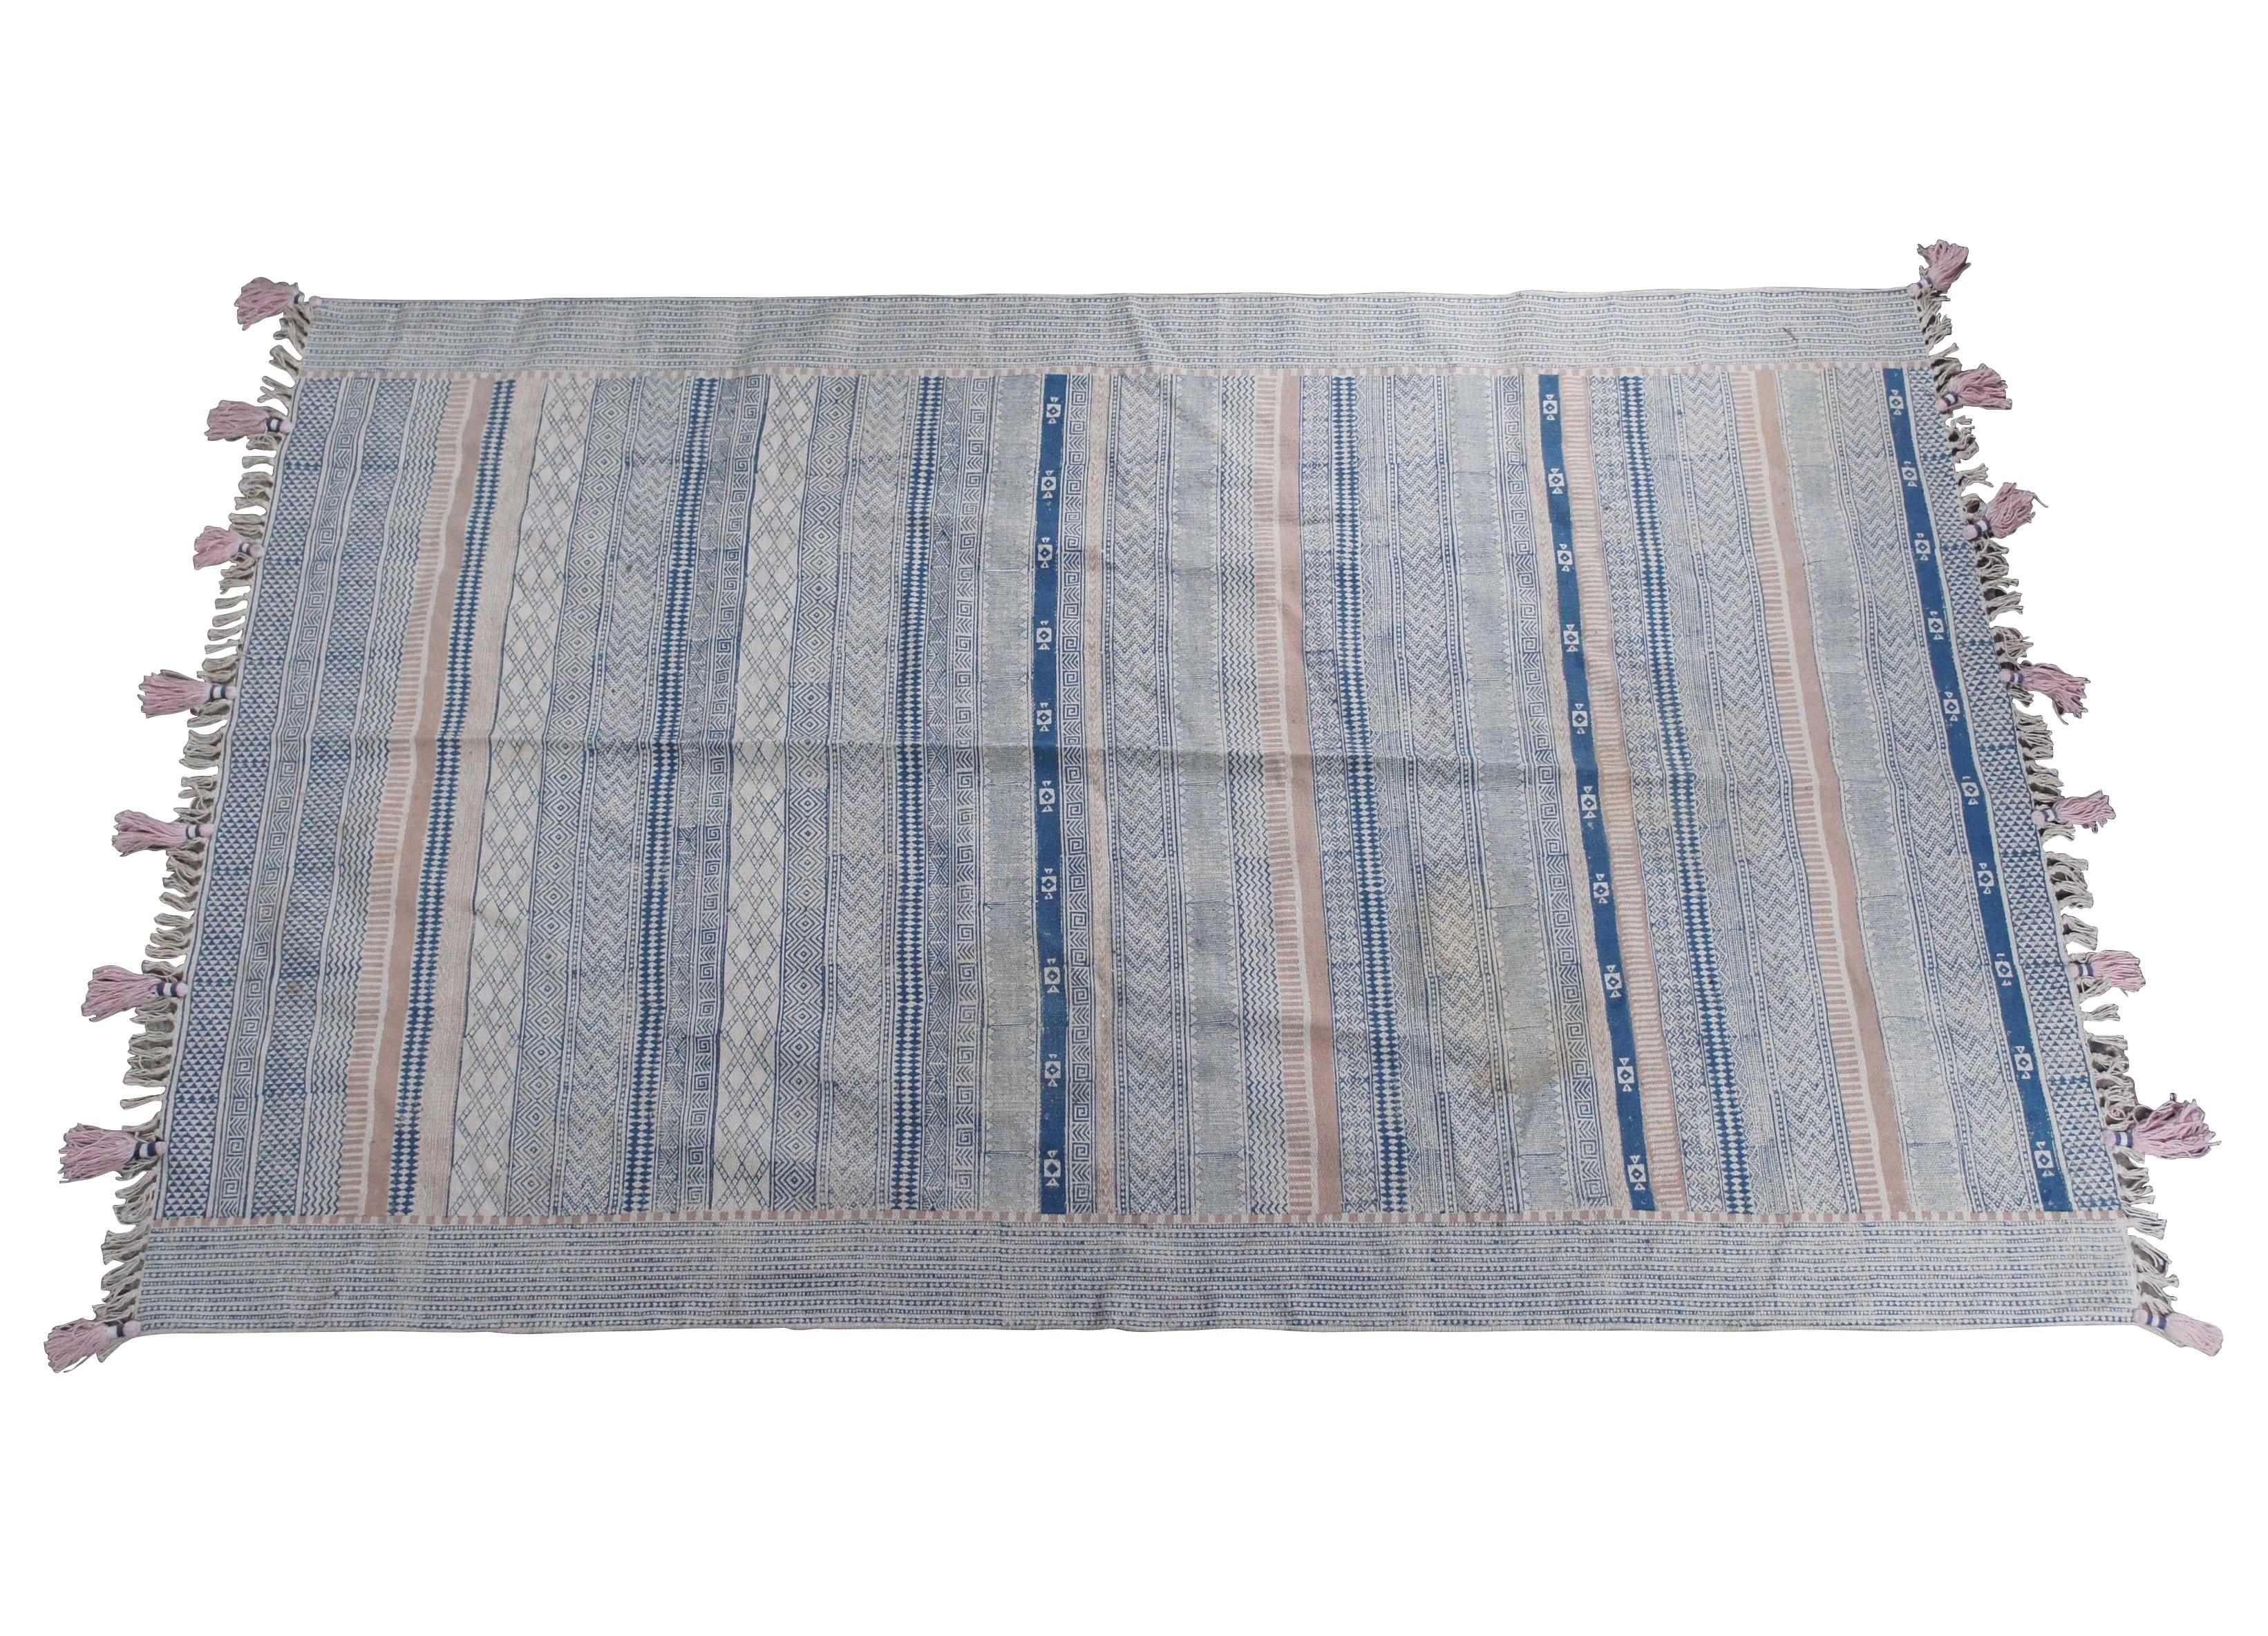 Turkish Modern Kilim Area Rug / Carpet with tassels, 5' x 8'